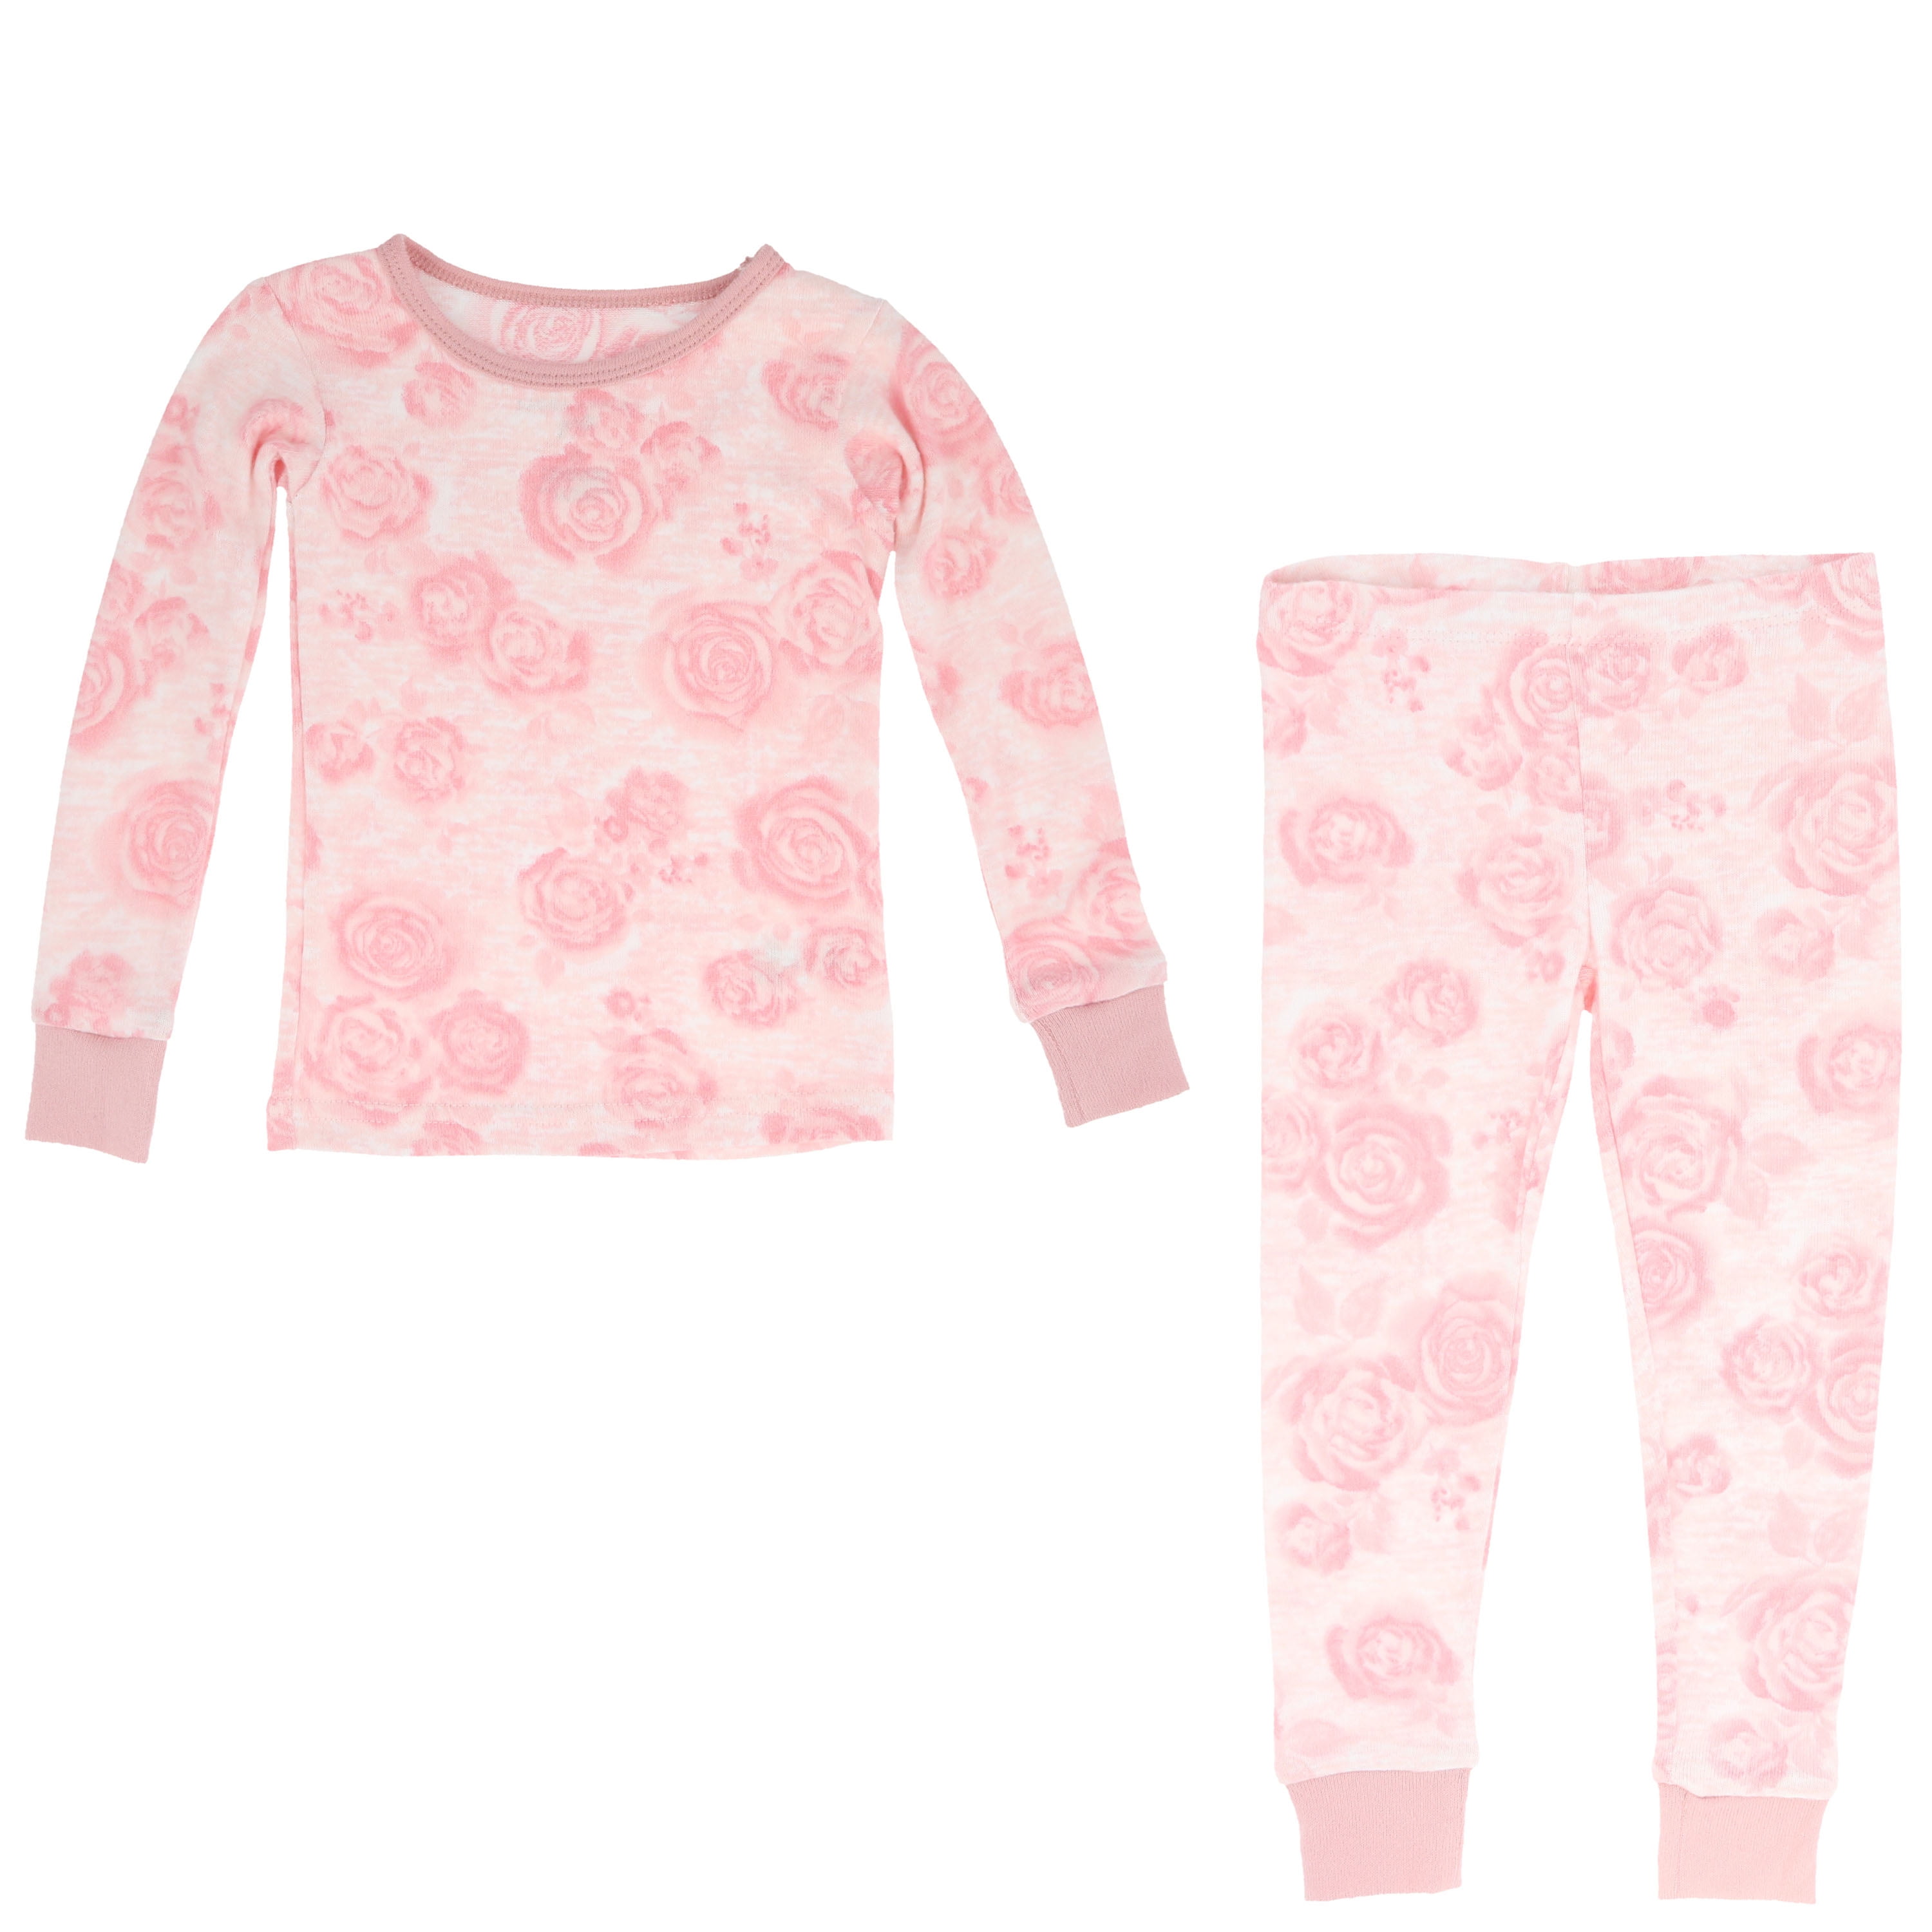 Laura Ashley Girls Snug Fit Pajama 2 Piece Set Pink Floral Size 2t